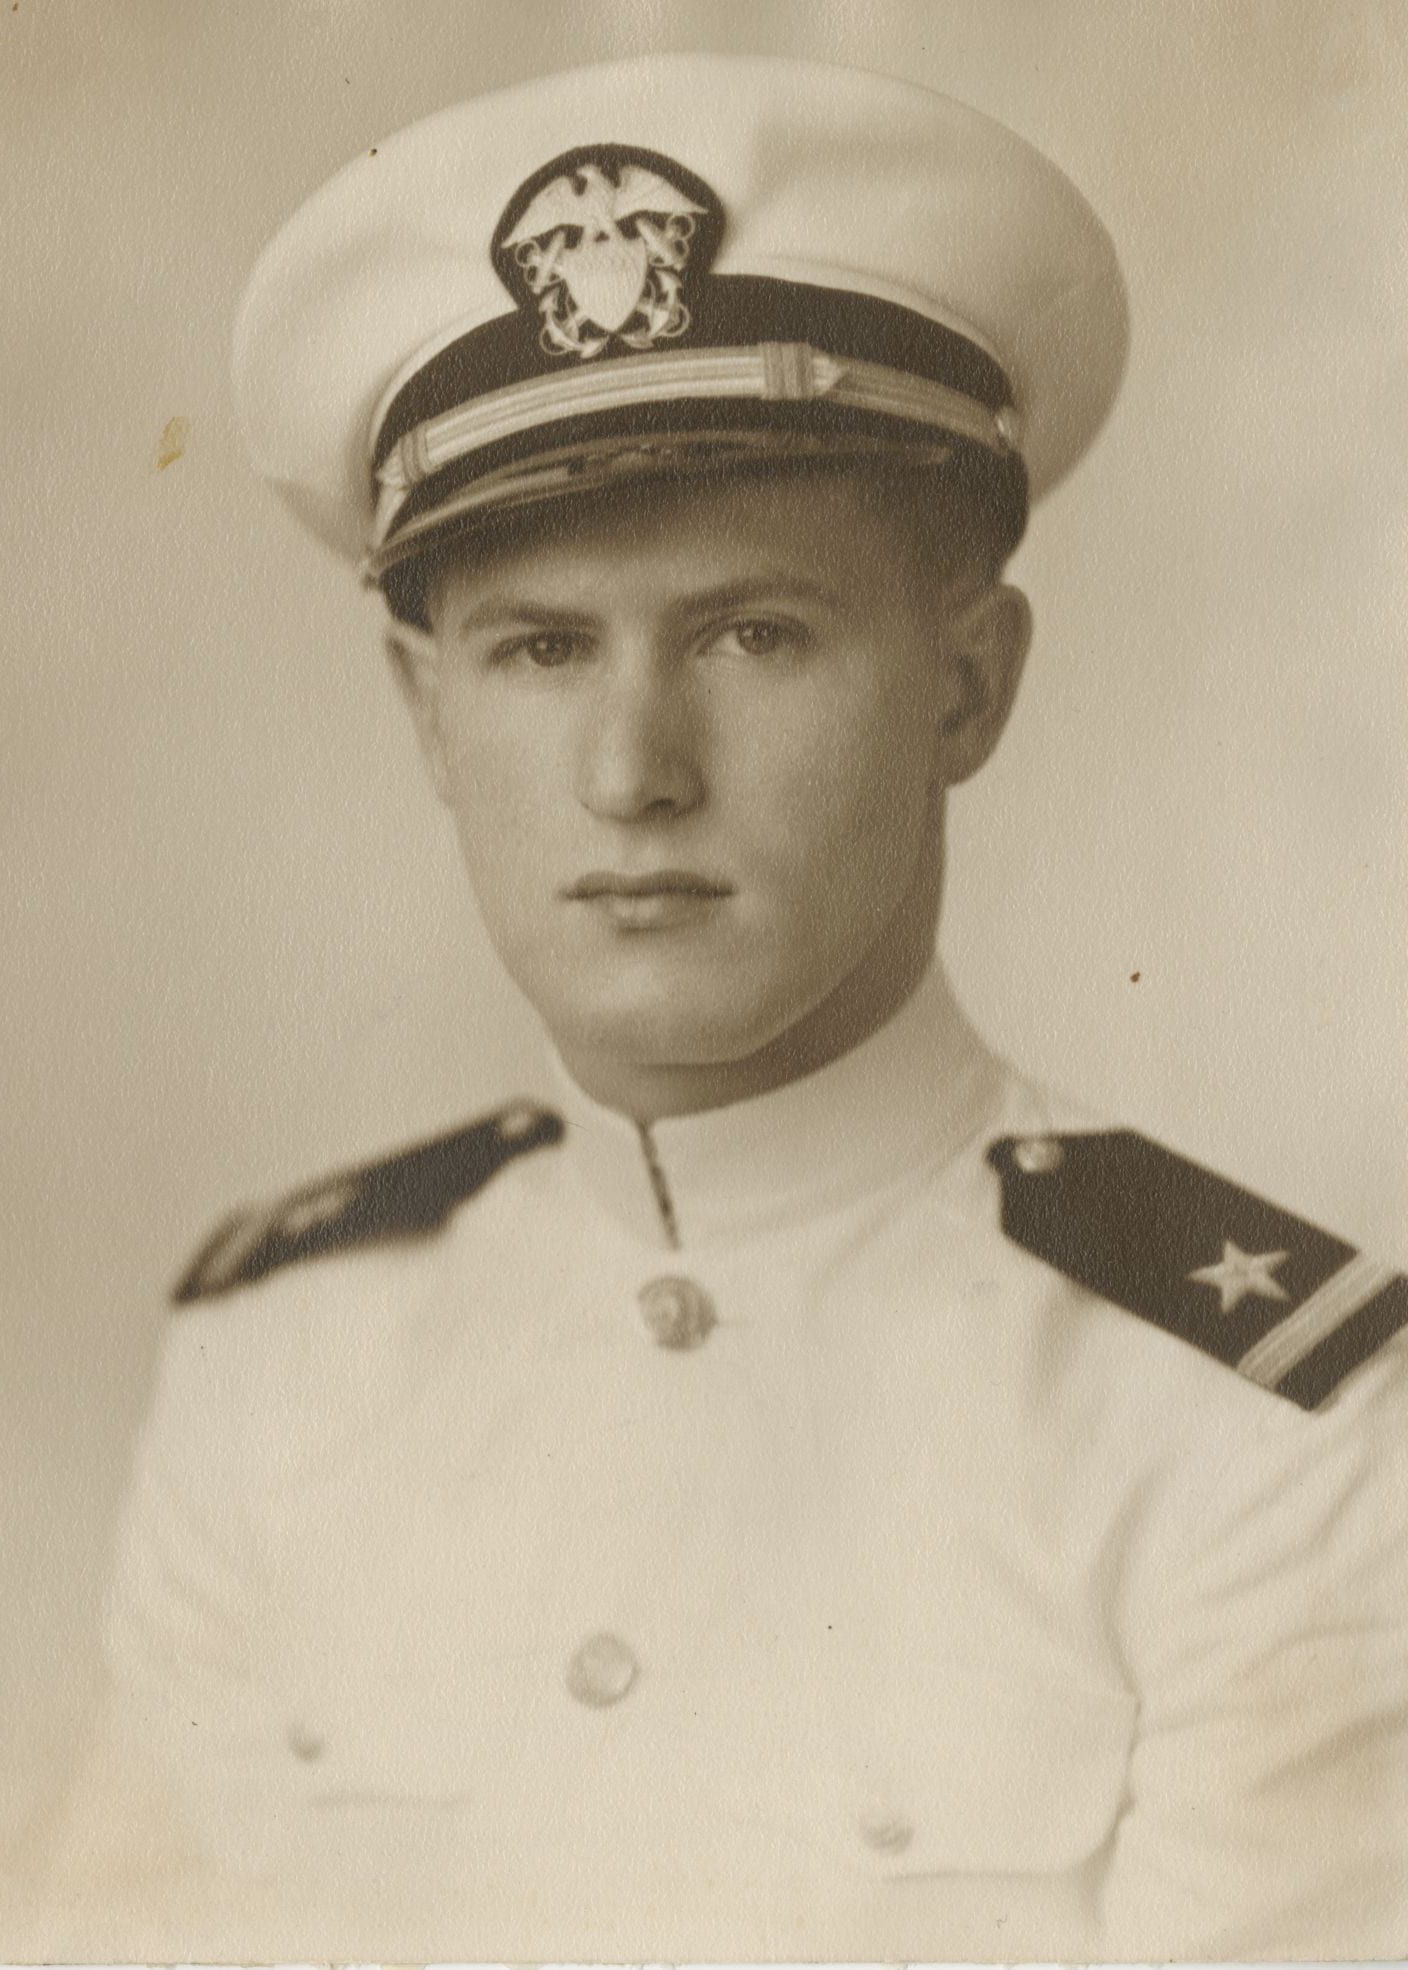 Photo of Henry Astrin in dress naval uniform